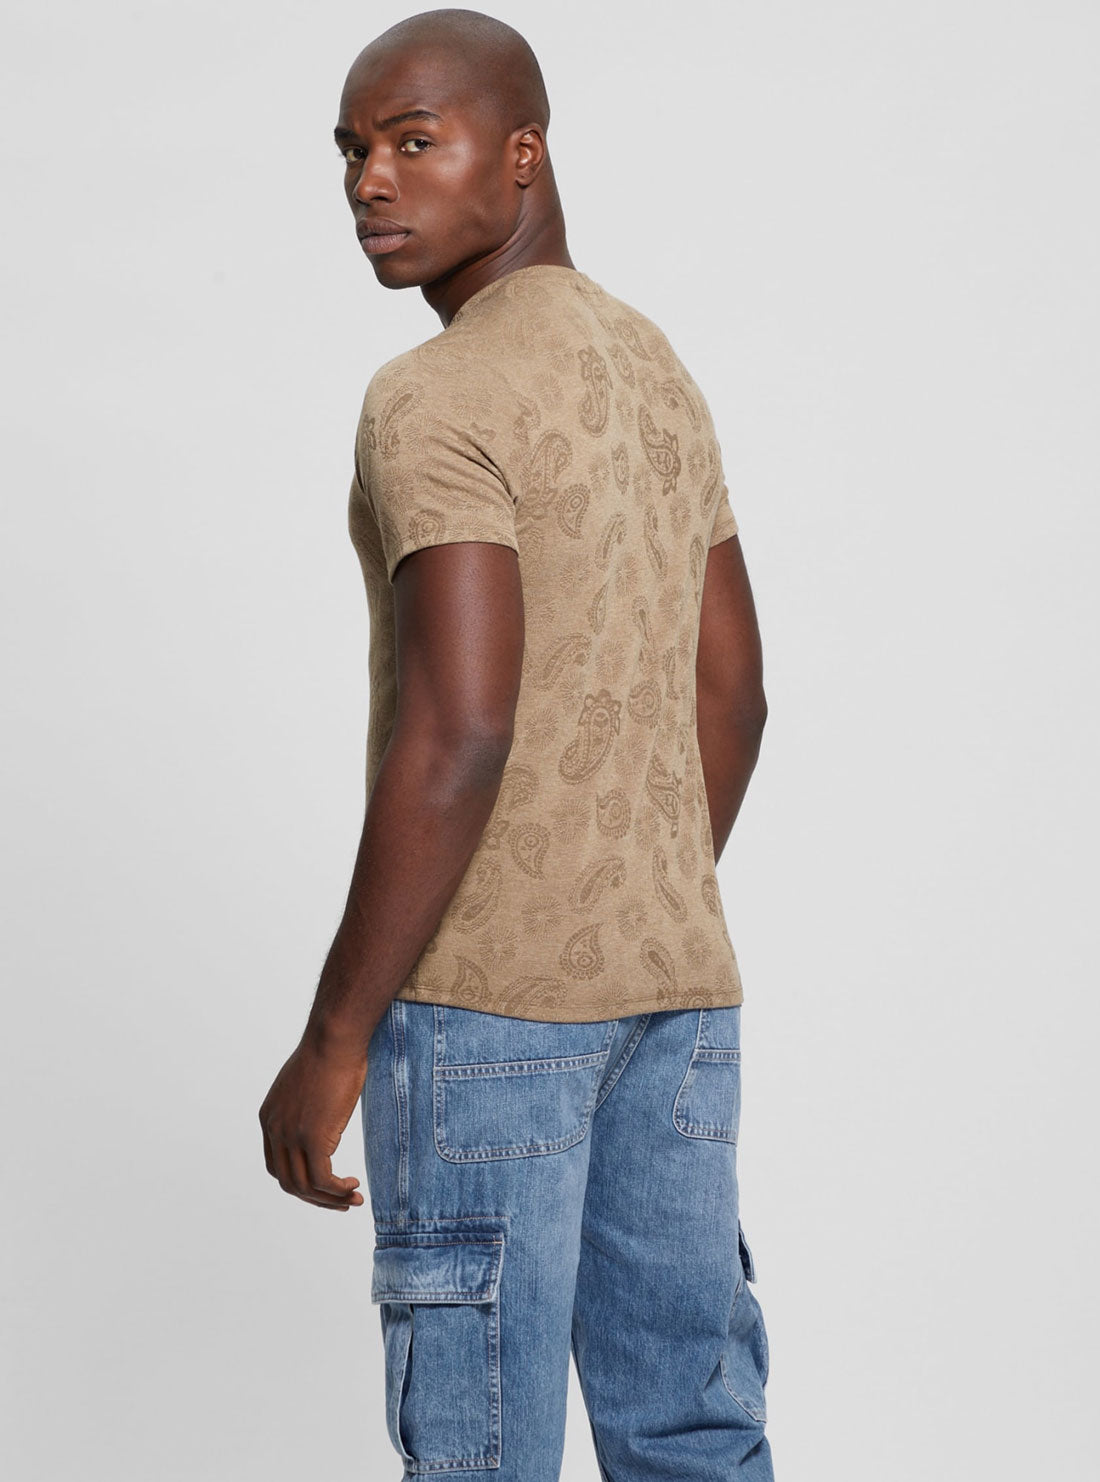 GUESS Beige Granada Jacquard Knit T-Shirt side view